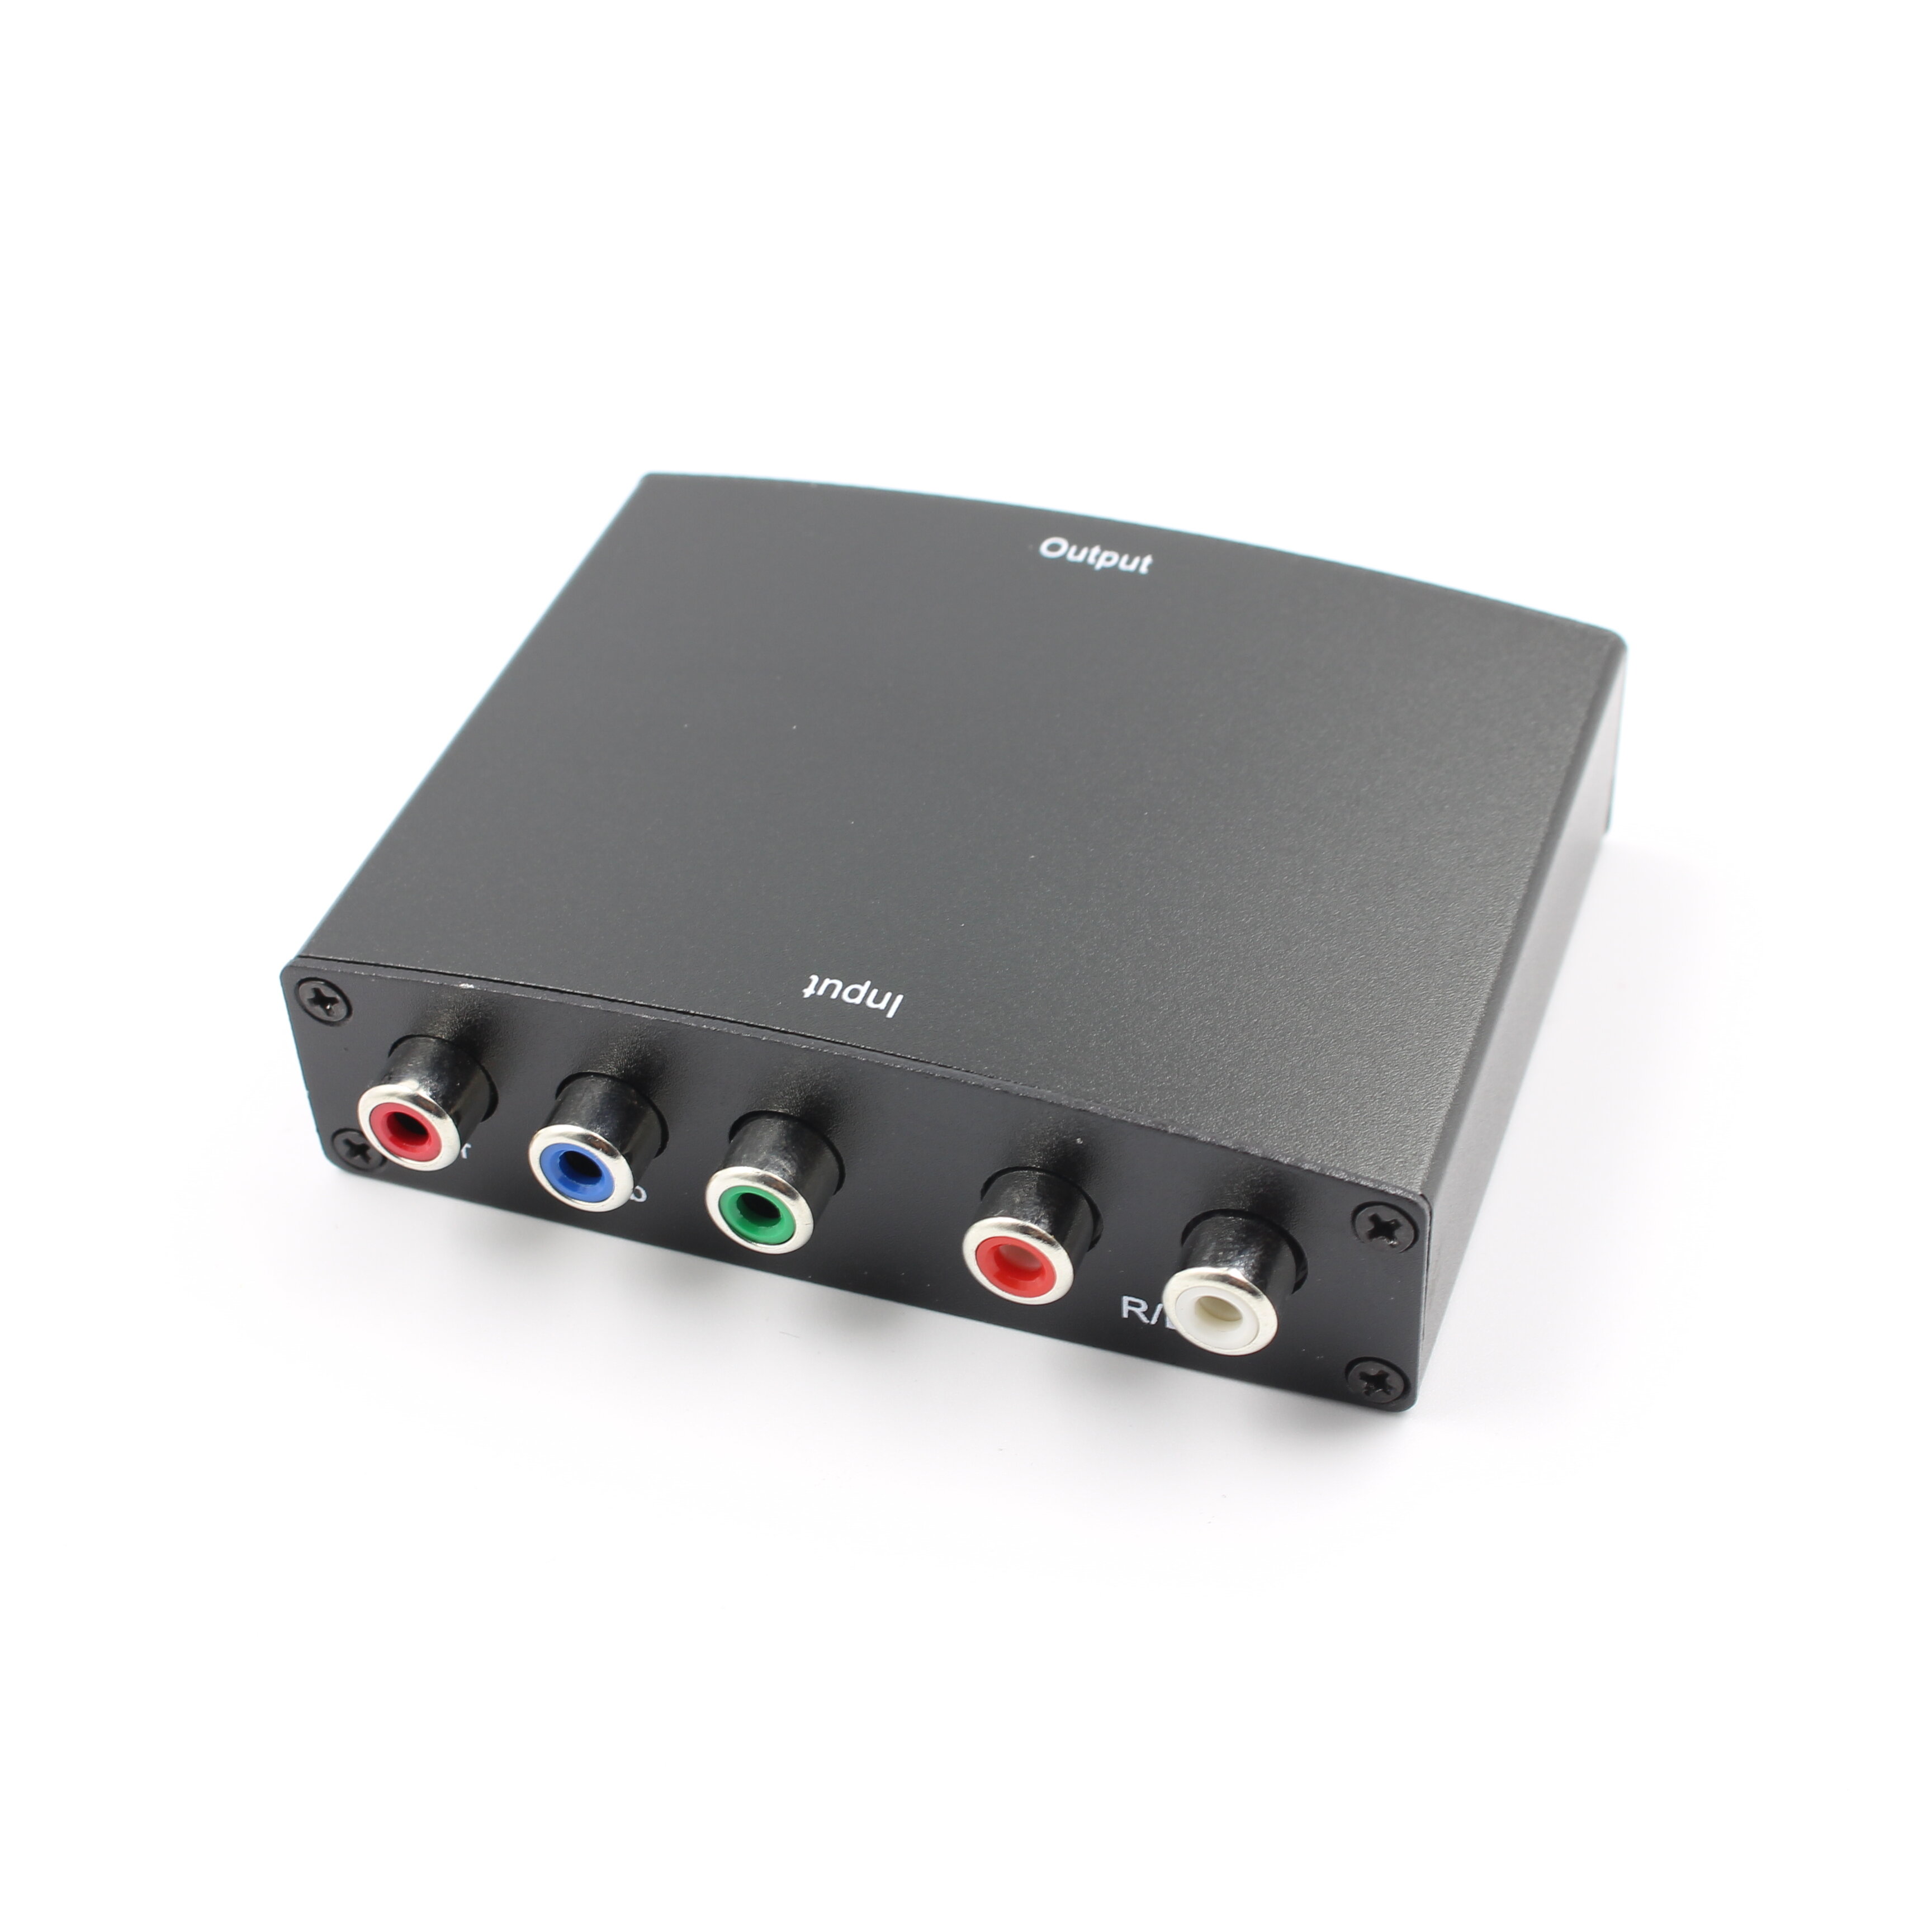 1080 P YPBPR naar HDMI Video Audio Converter Component naar HDMI RGB naar HDMI Converter Adapter voo